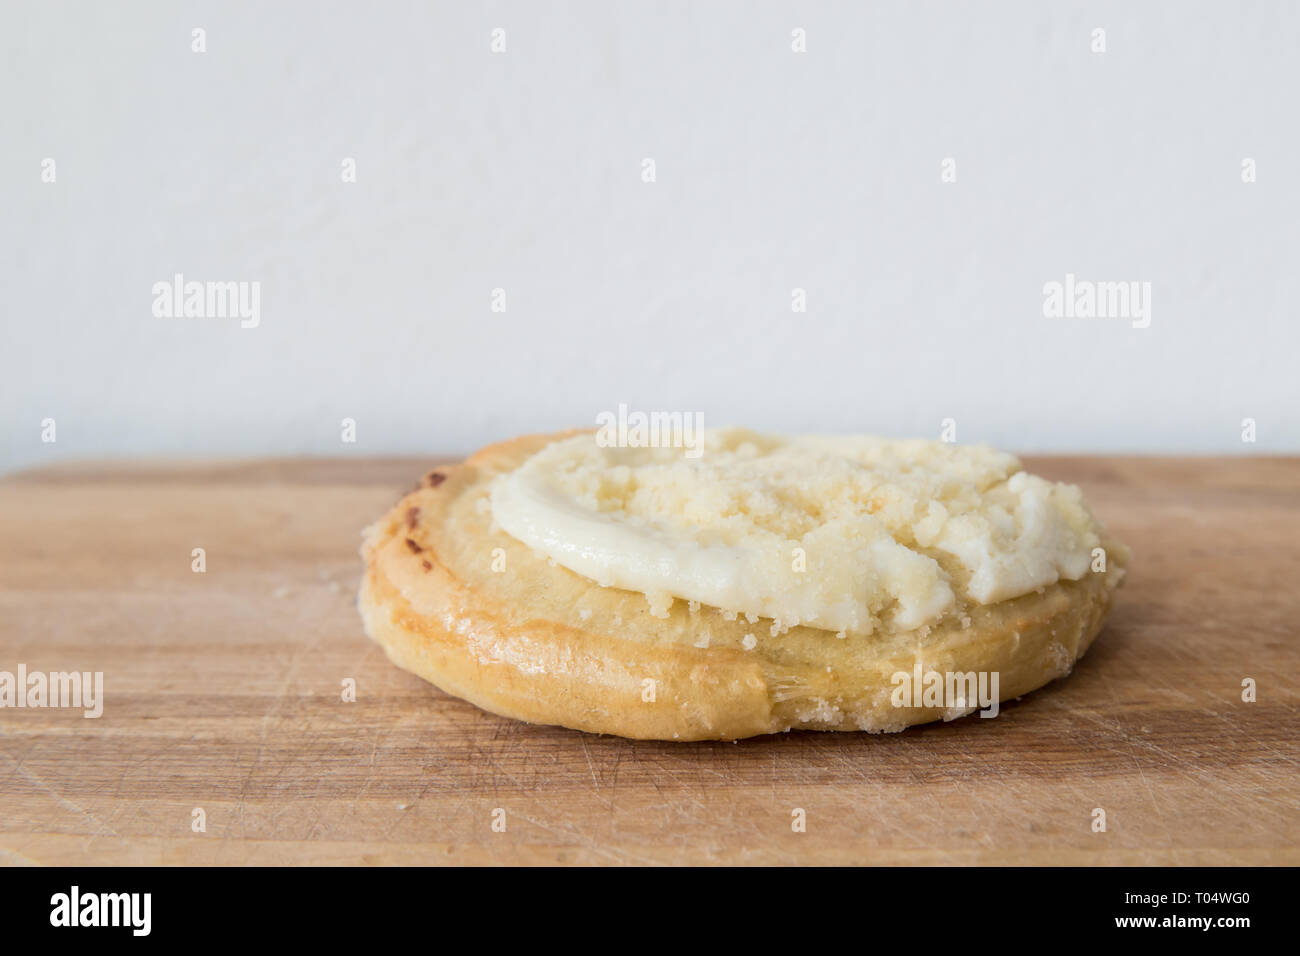 A Czech or Slovak pastry cake koláč tvarohový.  A traditional kolache or kolach with cream cheese and a streudel topping on dough. Stock Photo